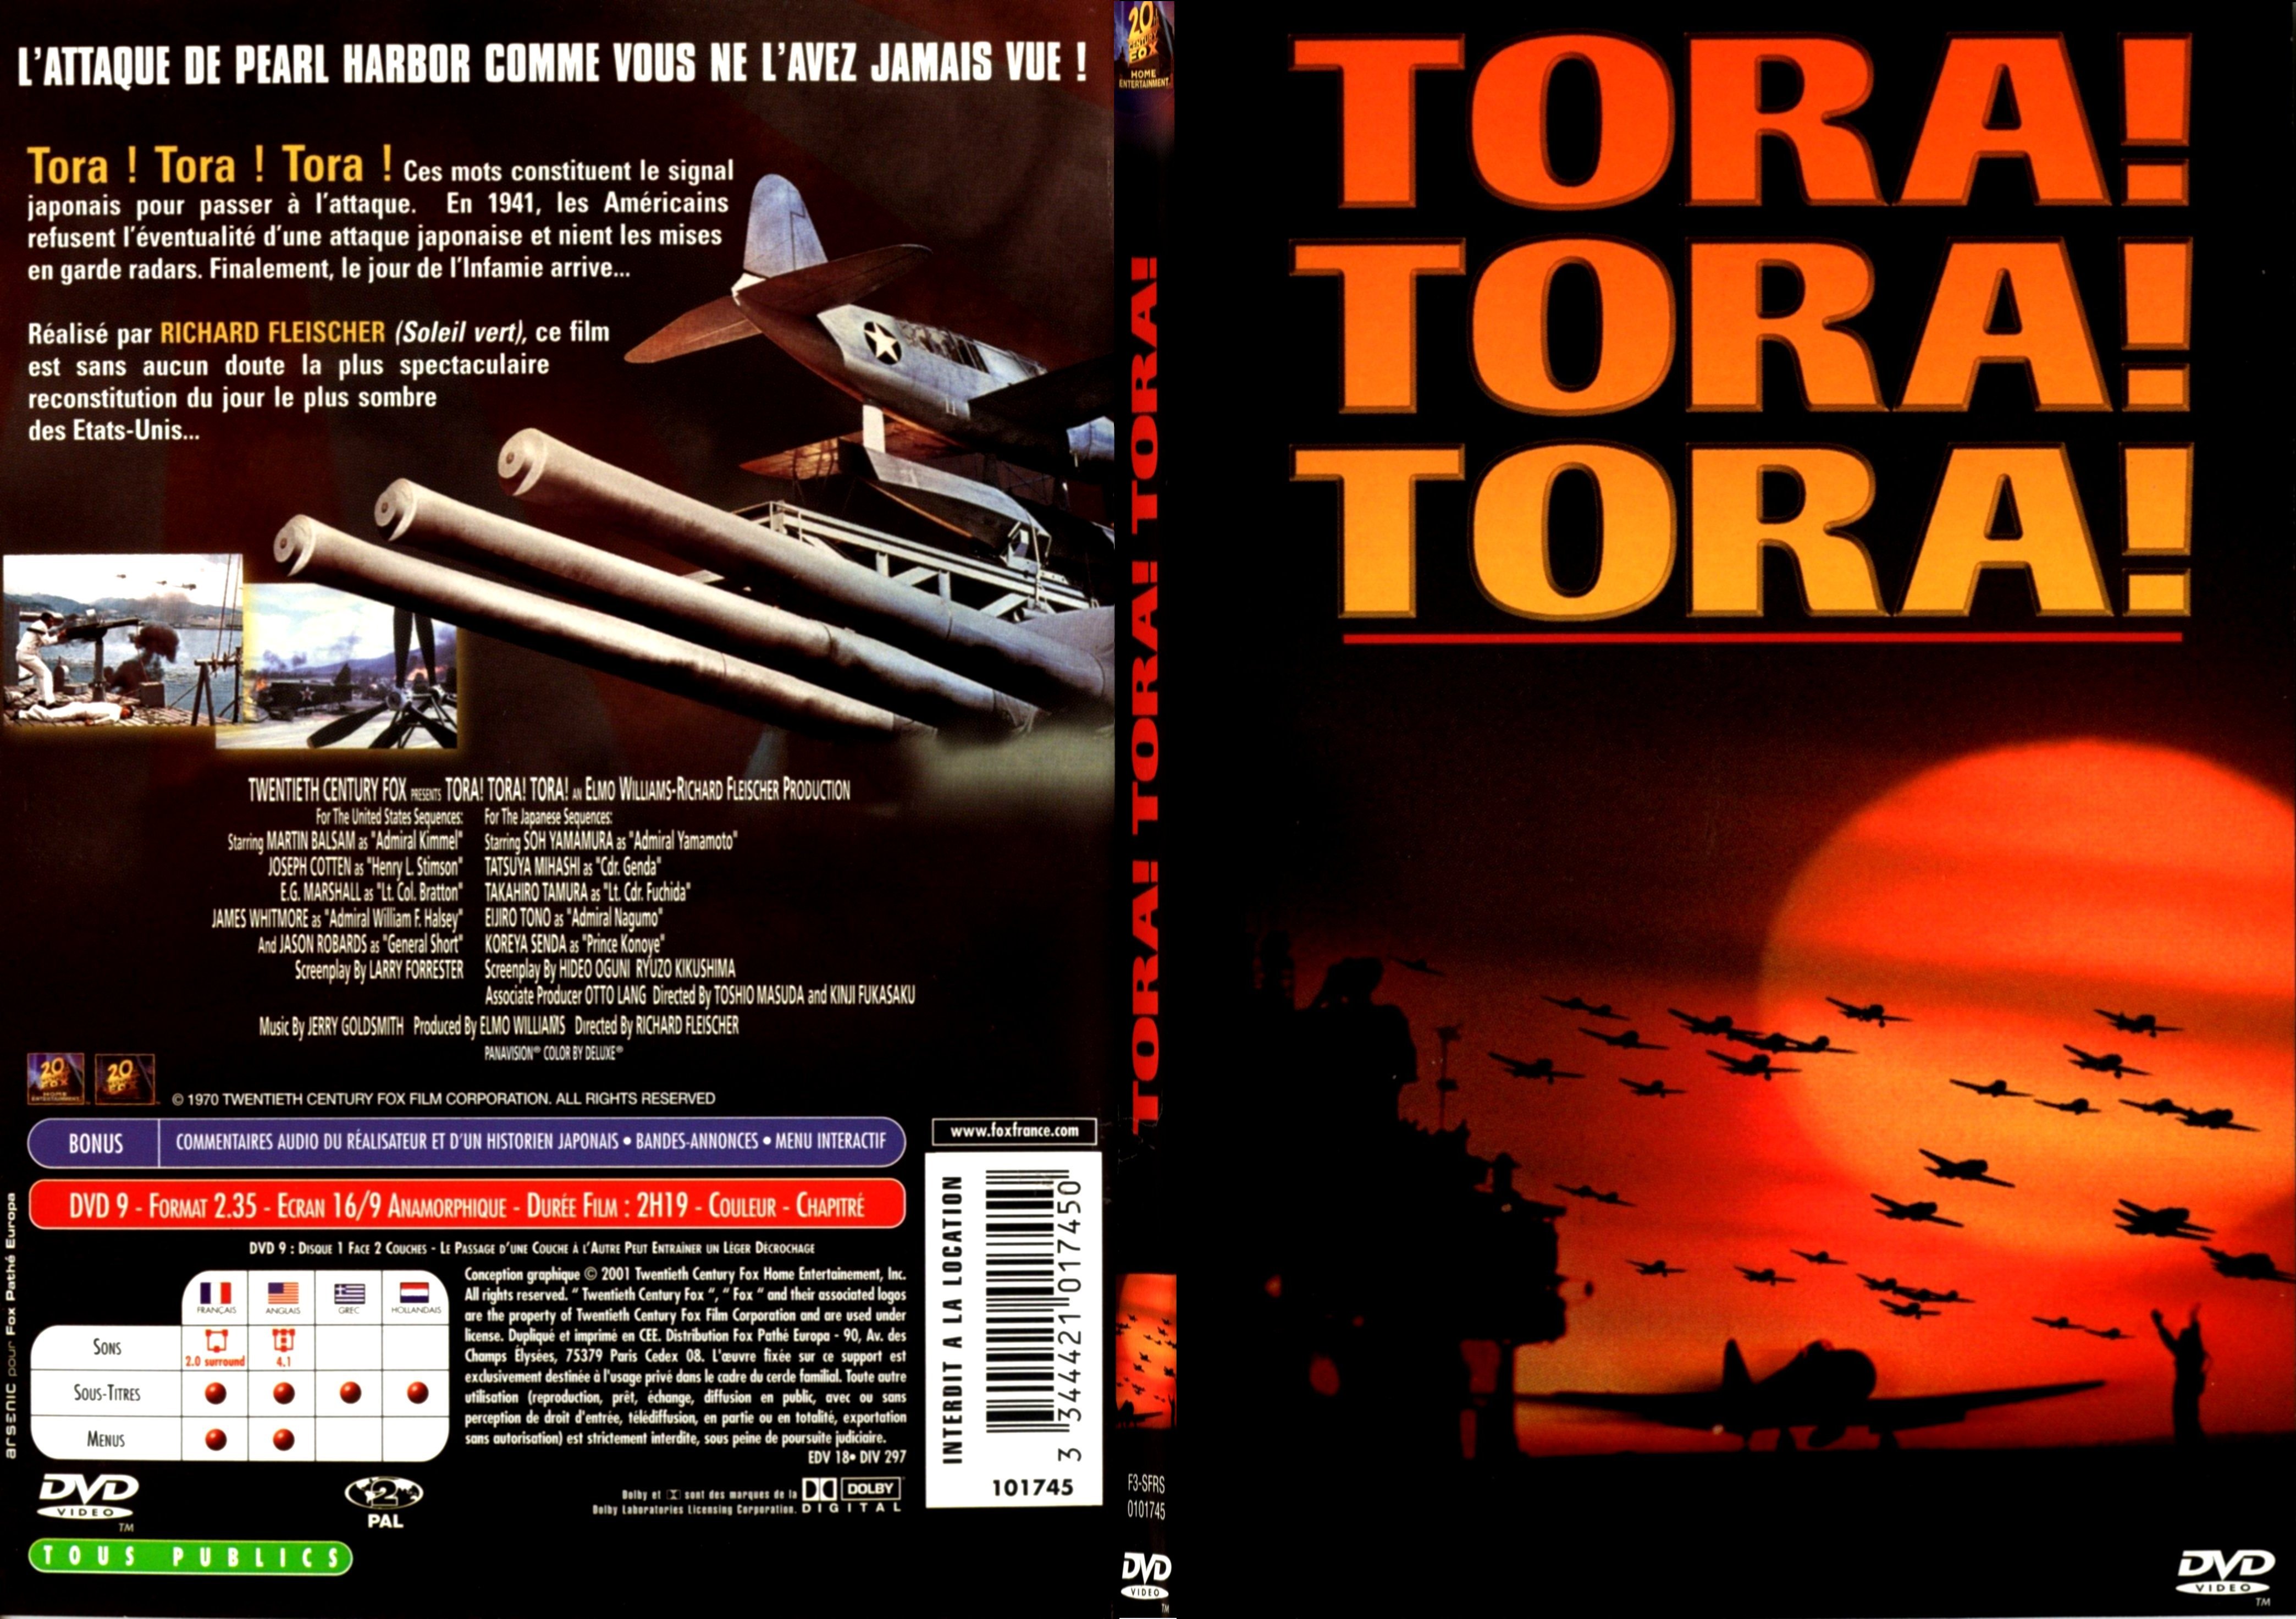 Jaquette DVD Tora Tora Tora - SLIM